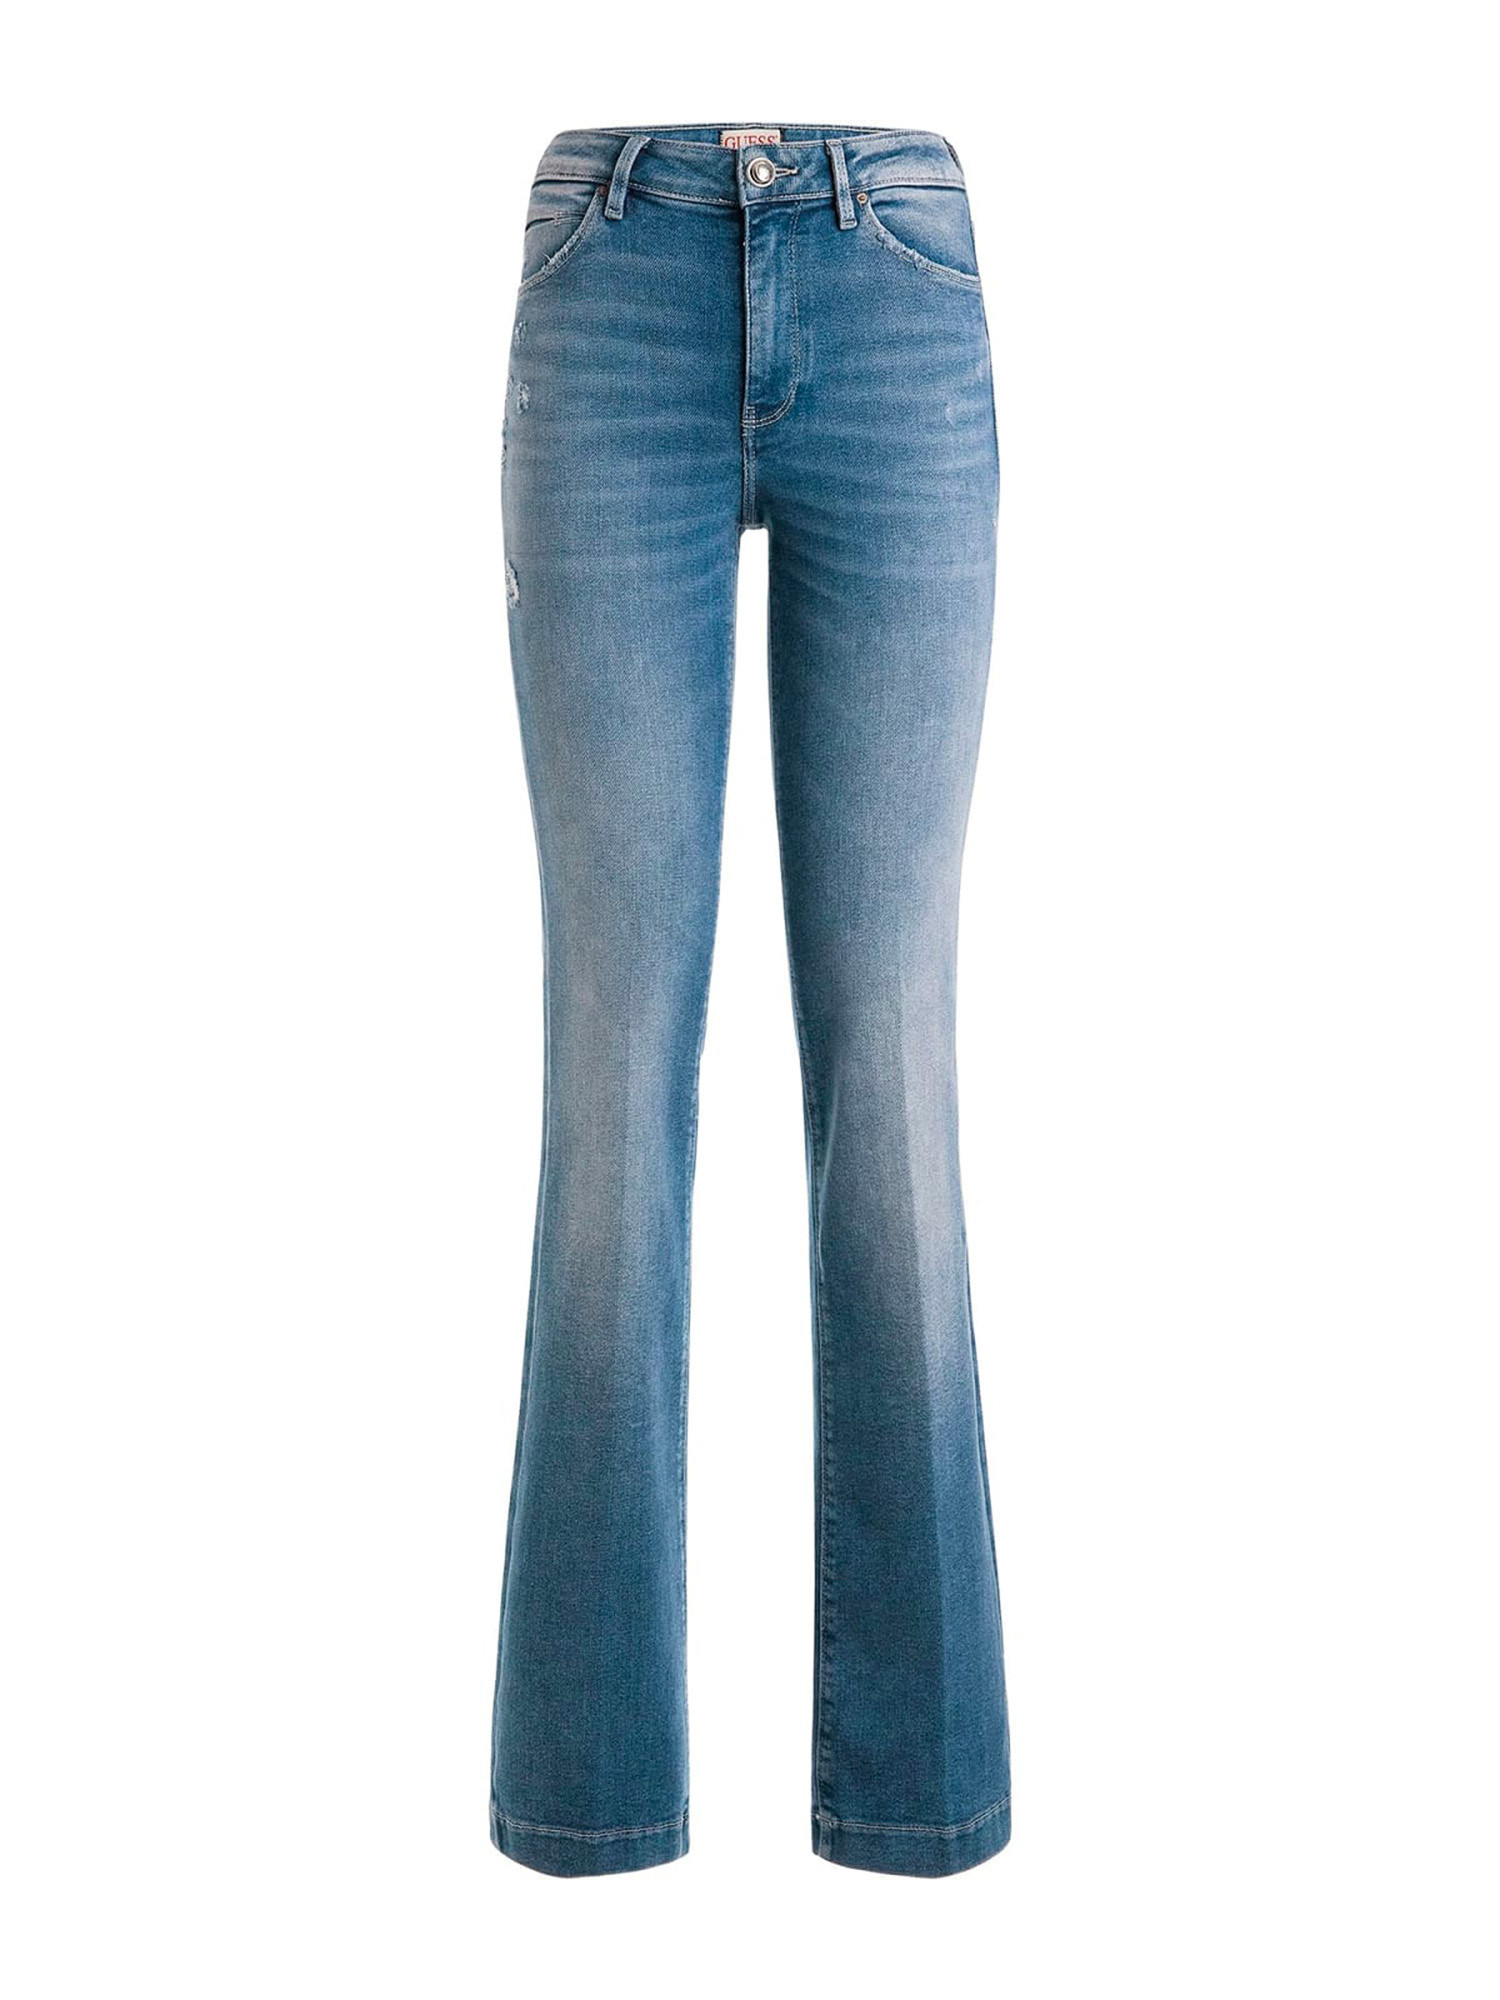 Guess - 5-pocket bootcut jeans, Dark Blue, large image number 3